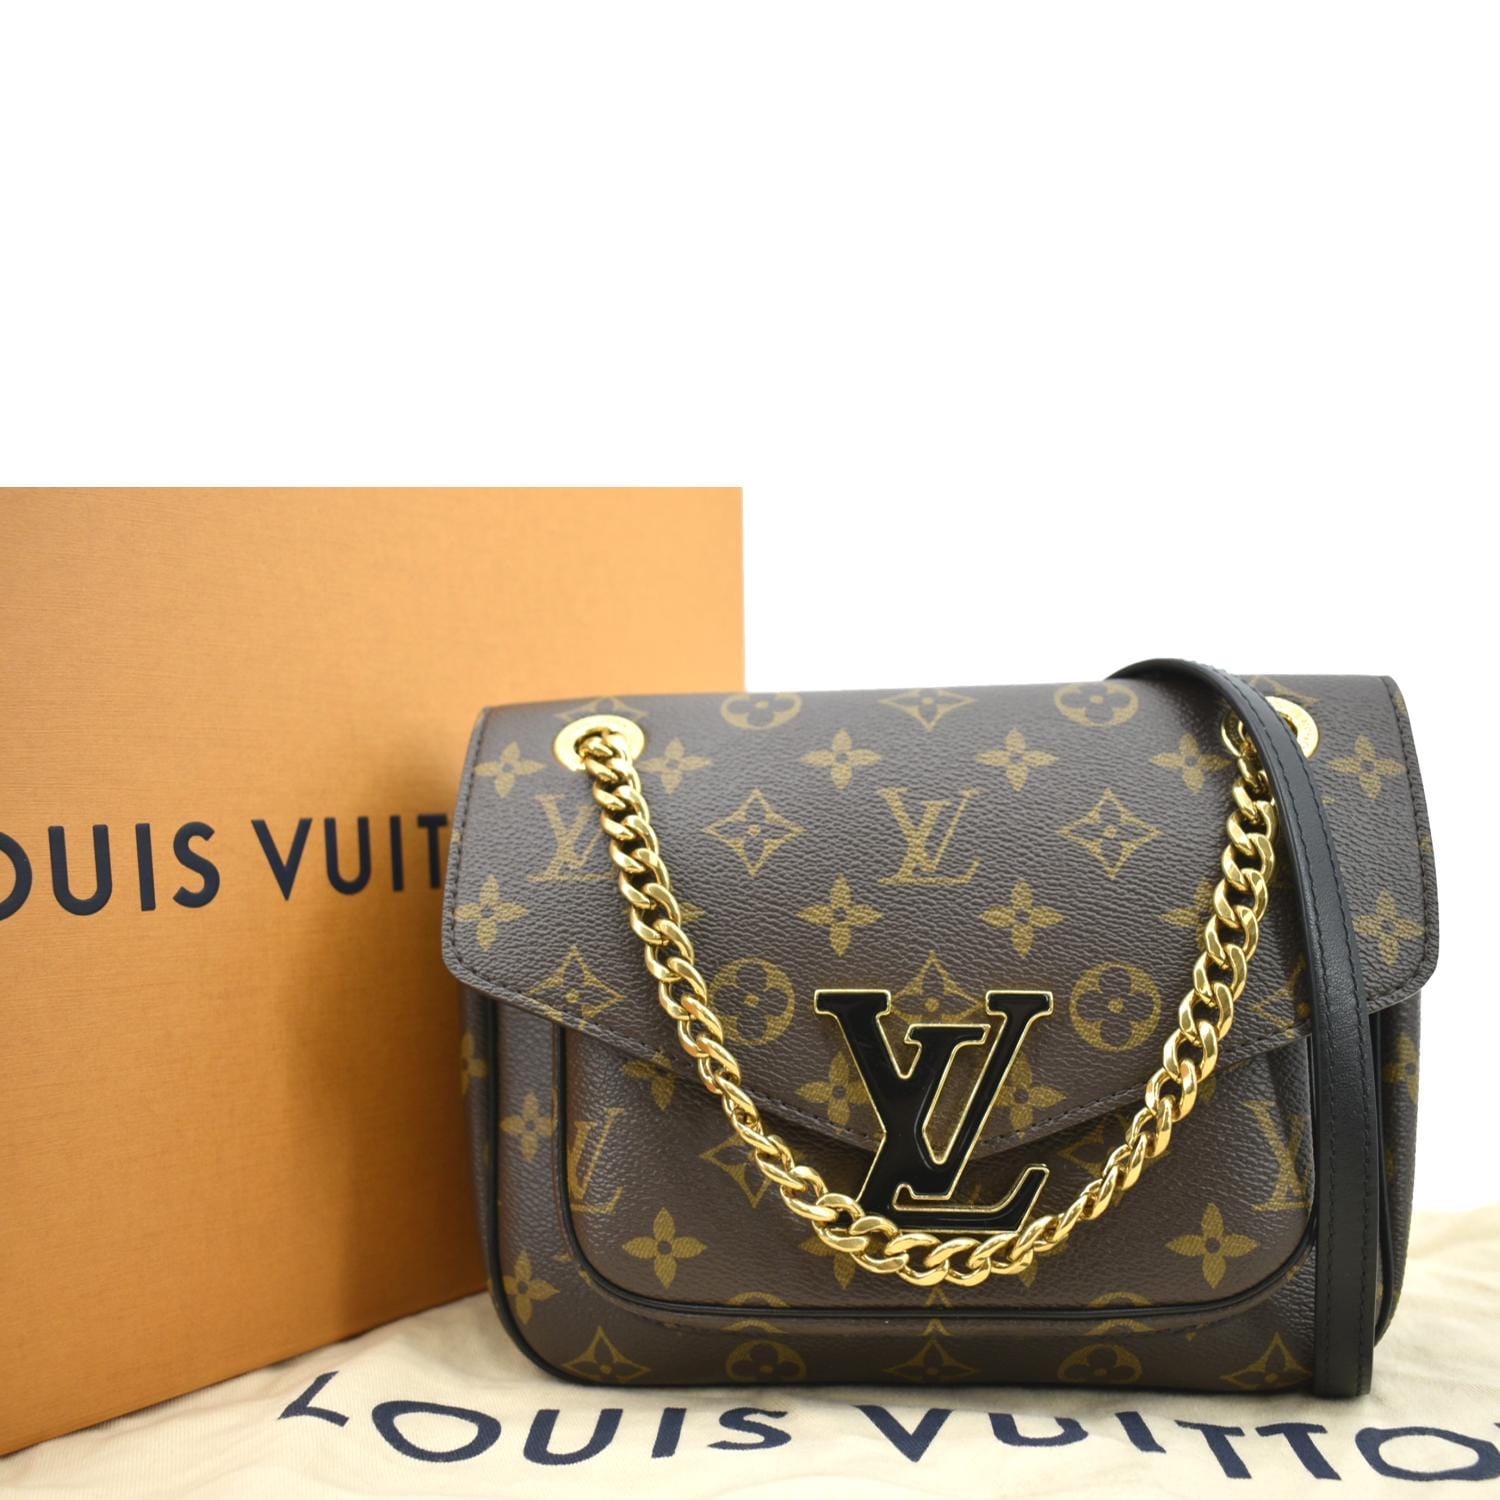 Louis Vuitton - Passy 